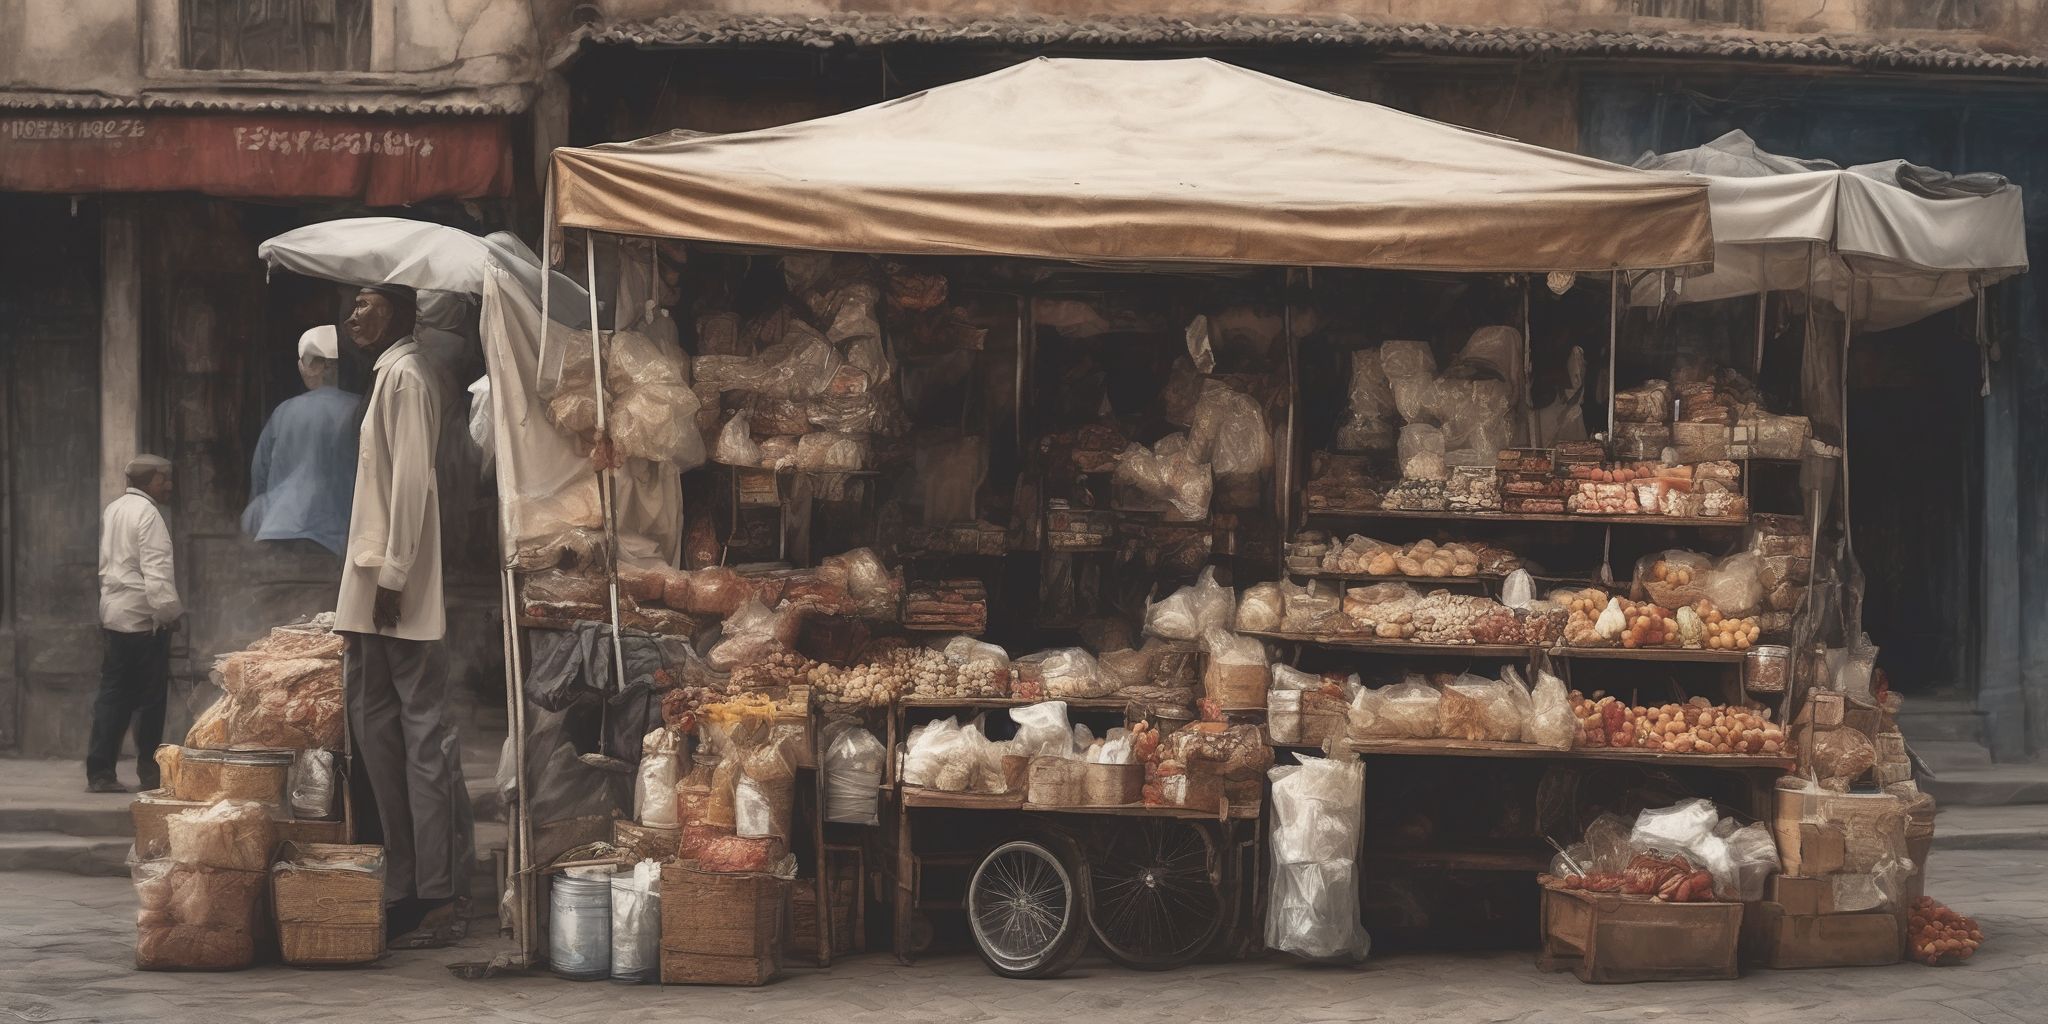 Vendor  in realistic, photographic style